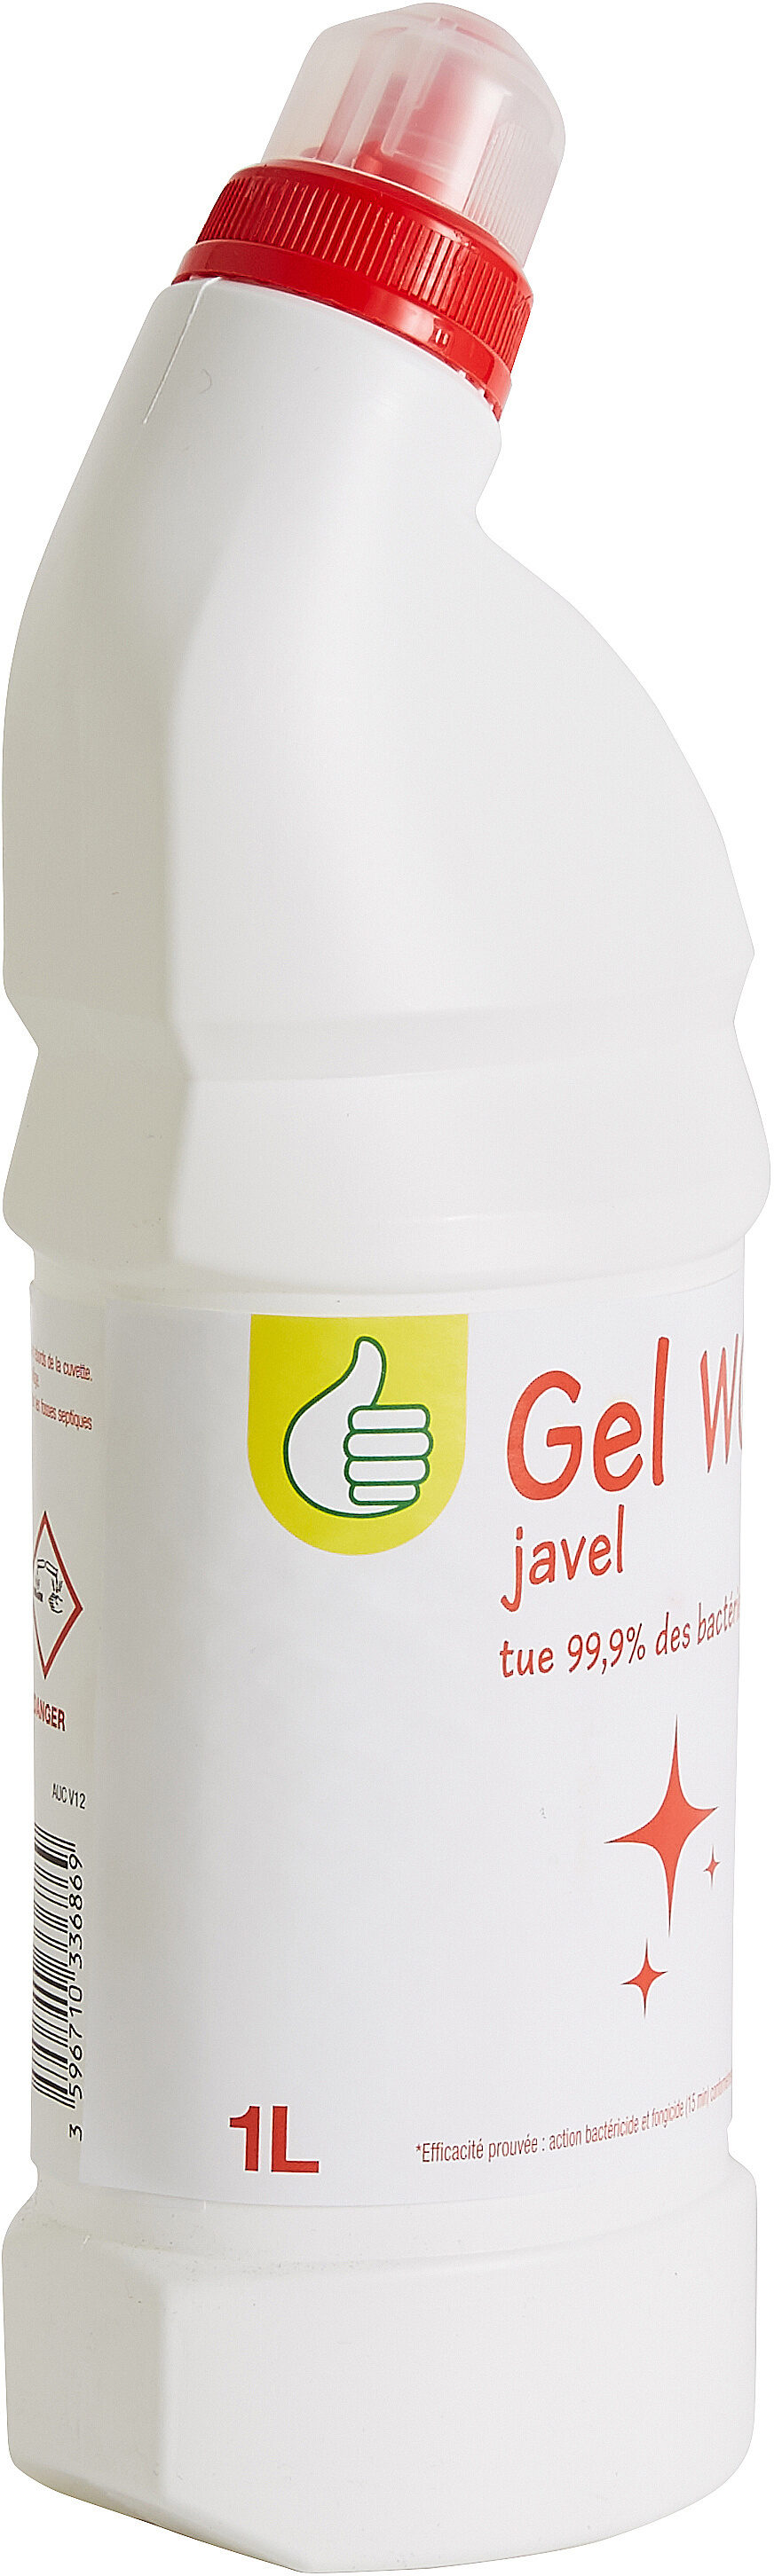 Gel WC Javel - Product - fr